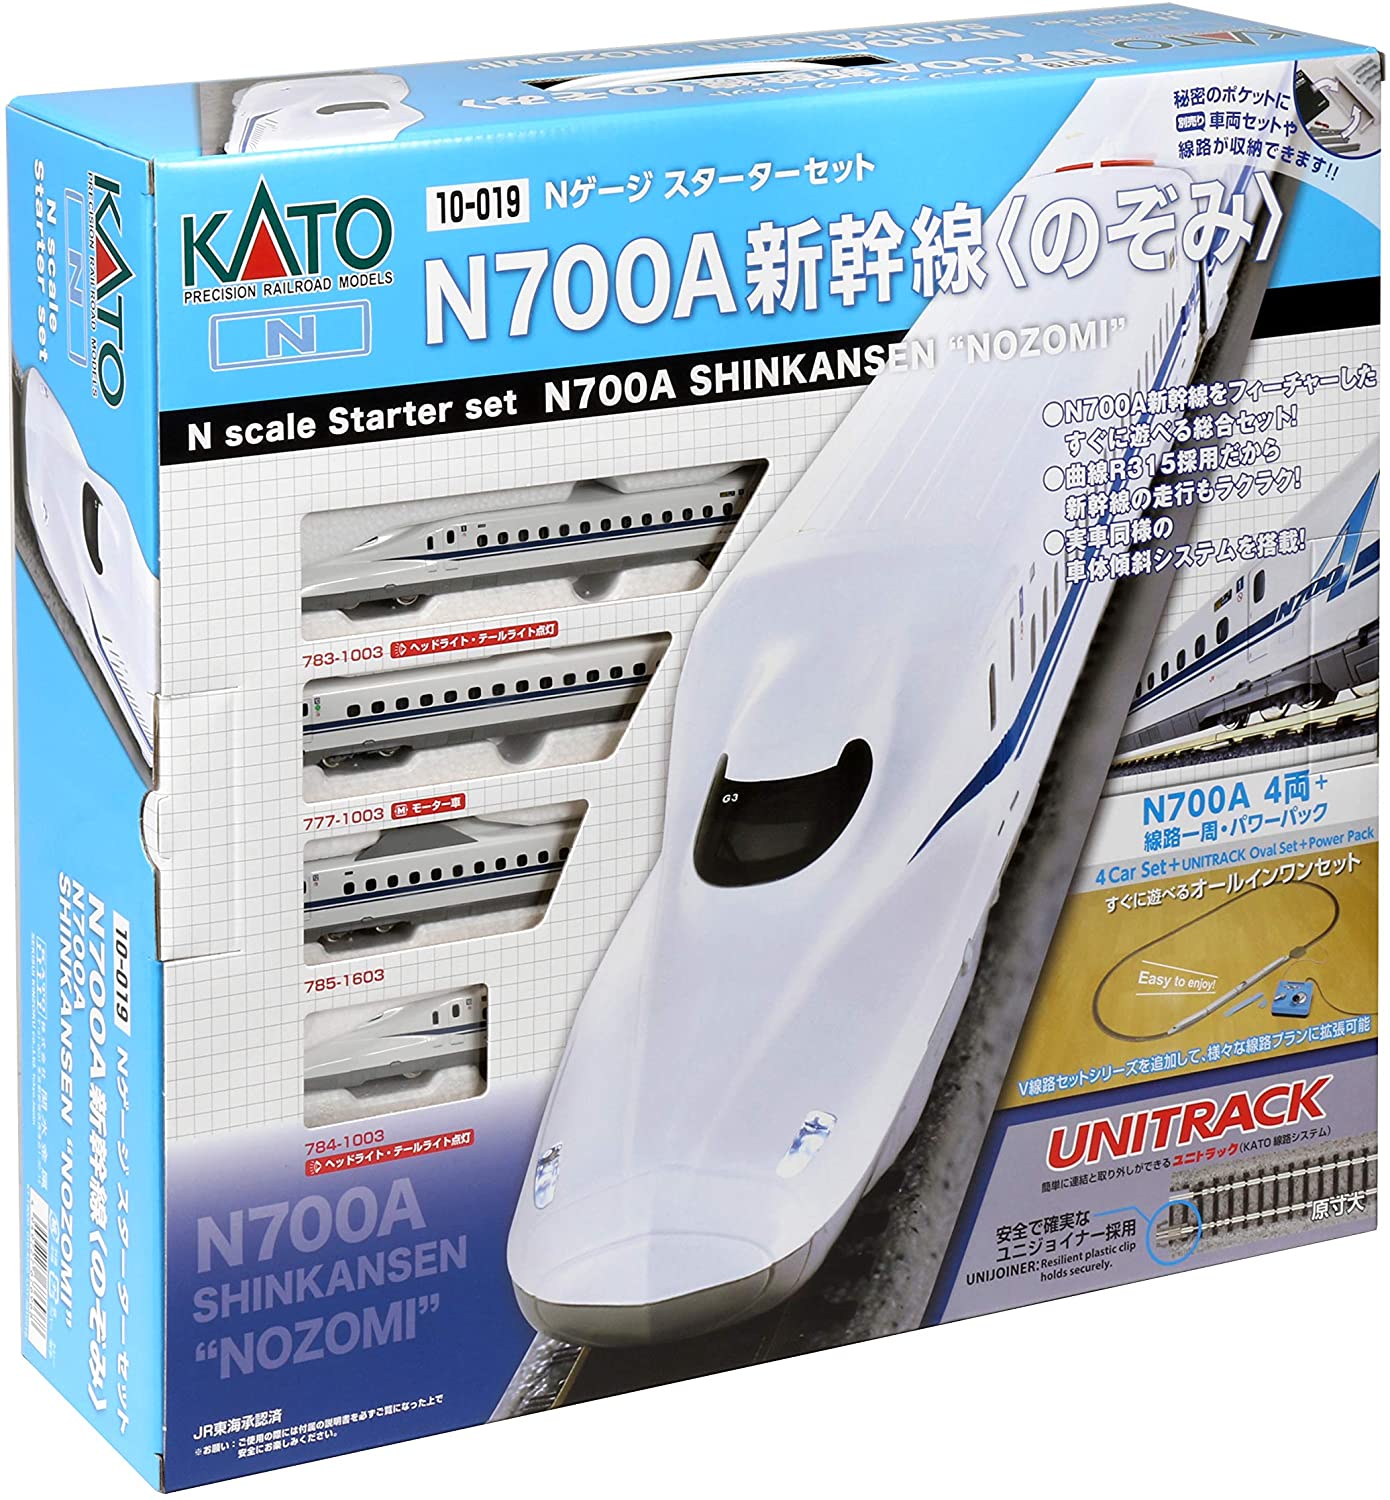 10-019 Starter Set Shinkansen Series N700A `Nozomi` (4-Car Set +